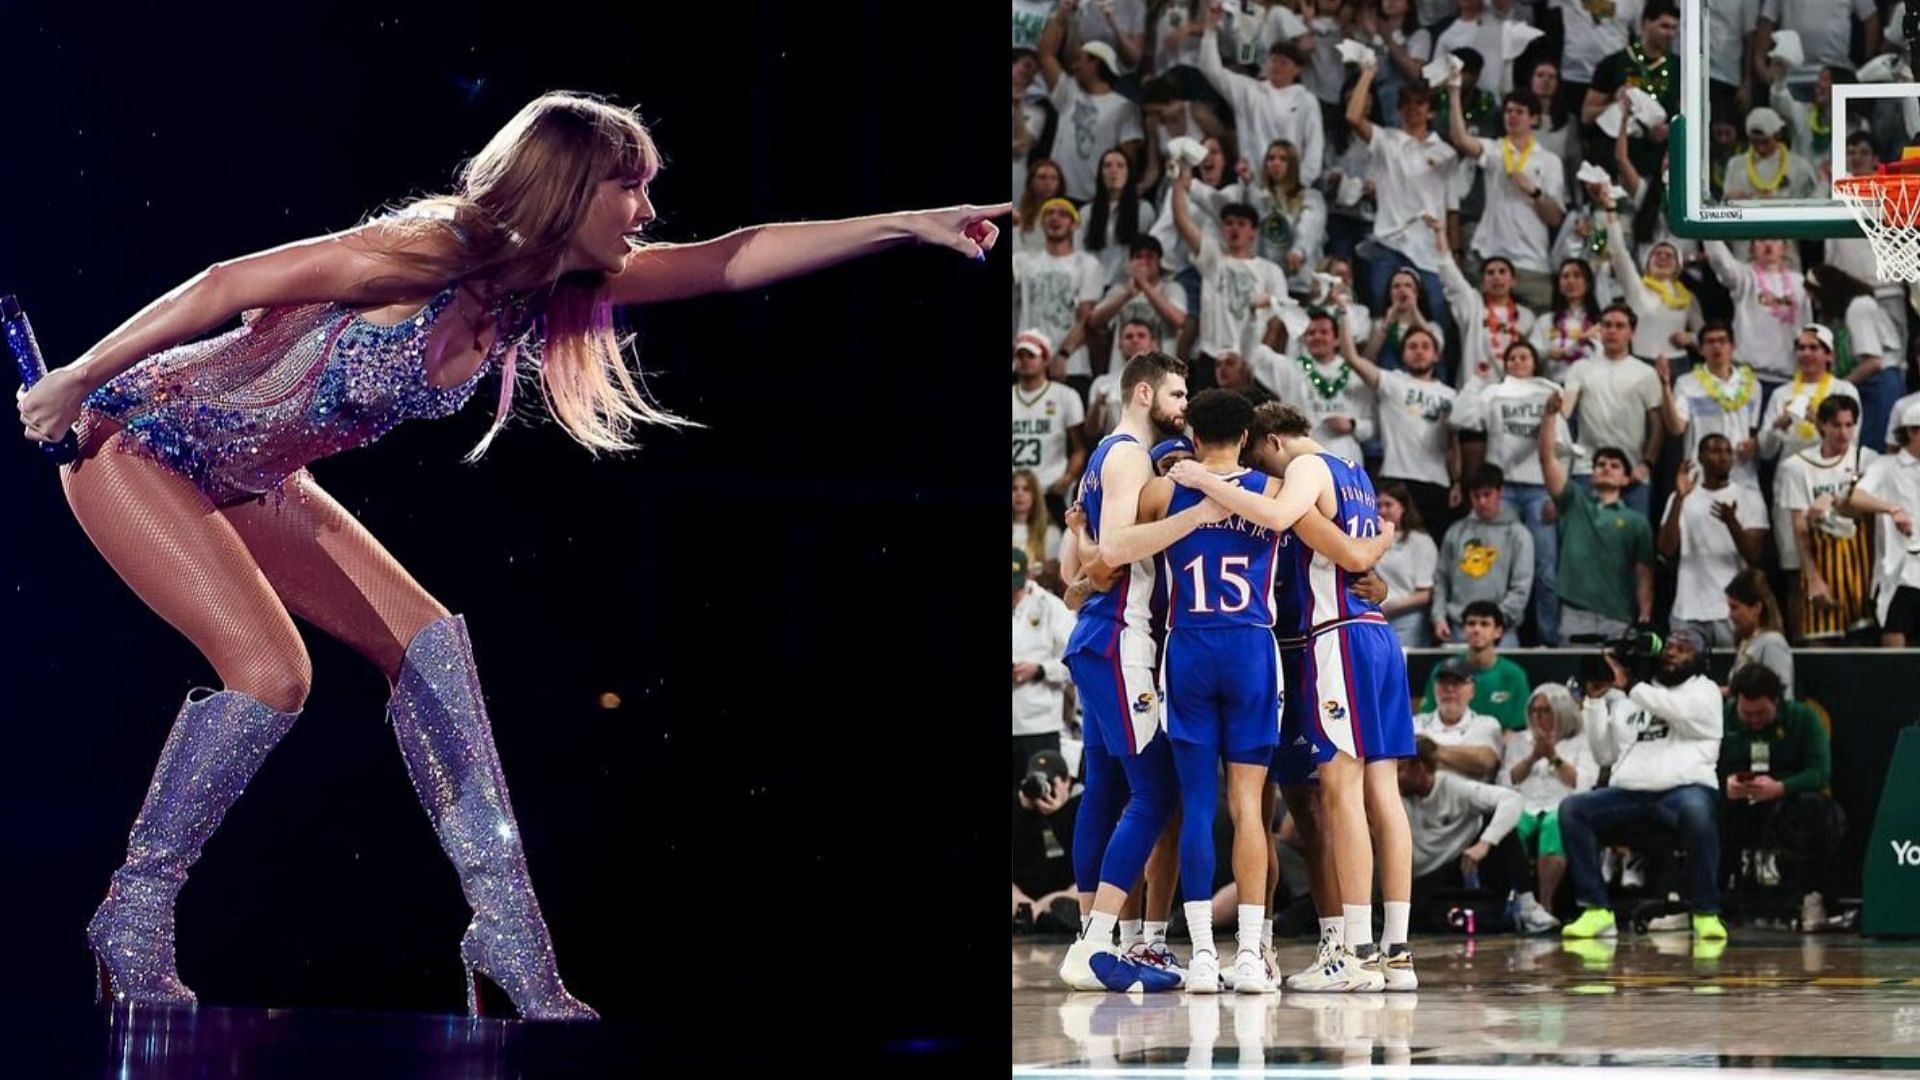 Musician Taylor Swift and the Kansas basketball team